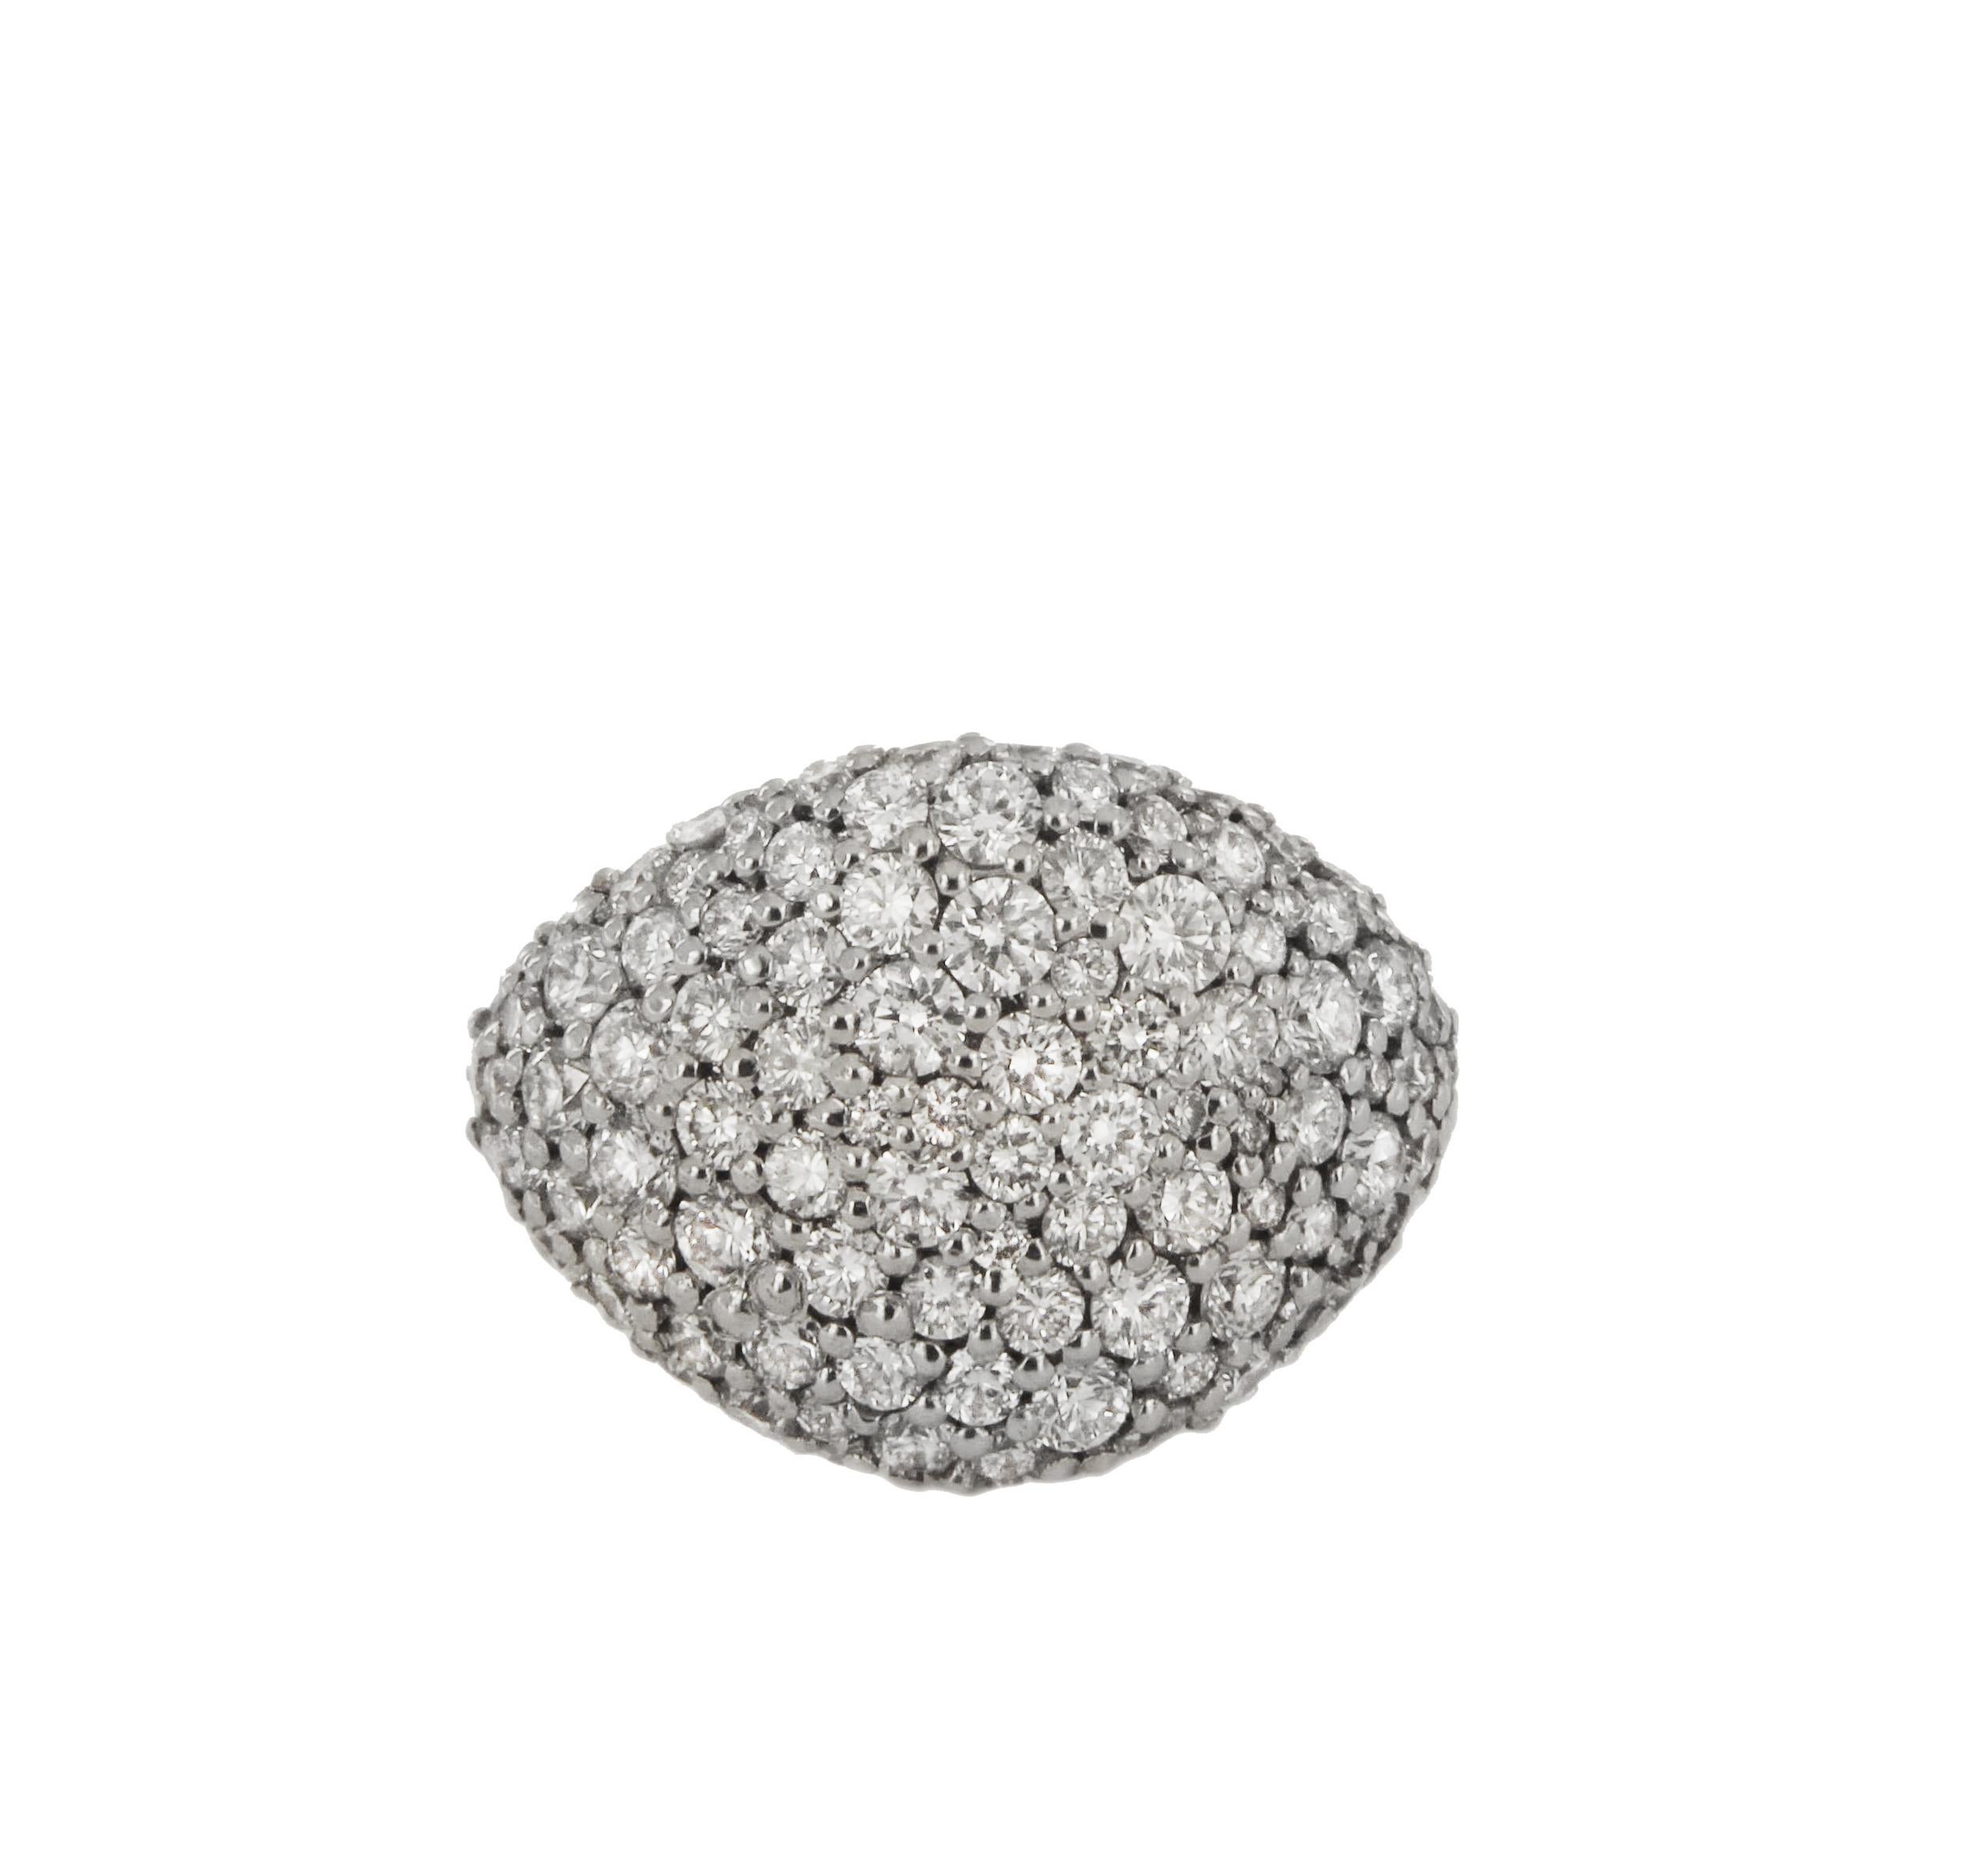 -Mint condition

-Ring size: 3.5

-18k White Gold & Diamonds

-Comes with David Yurman box